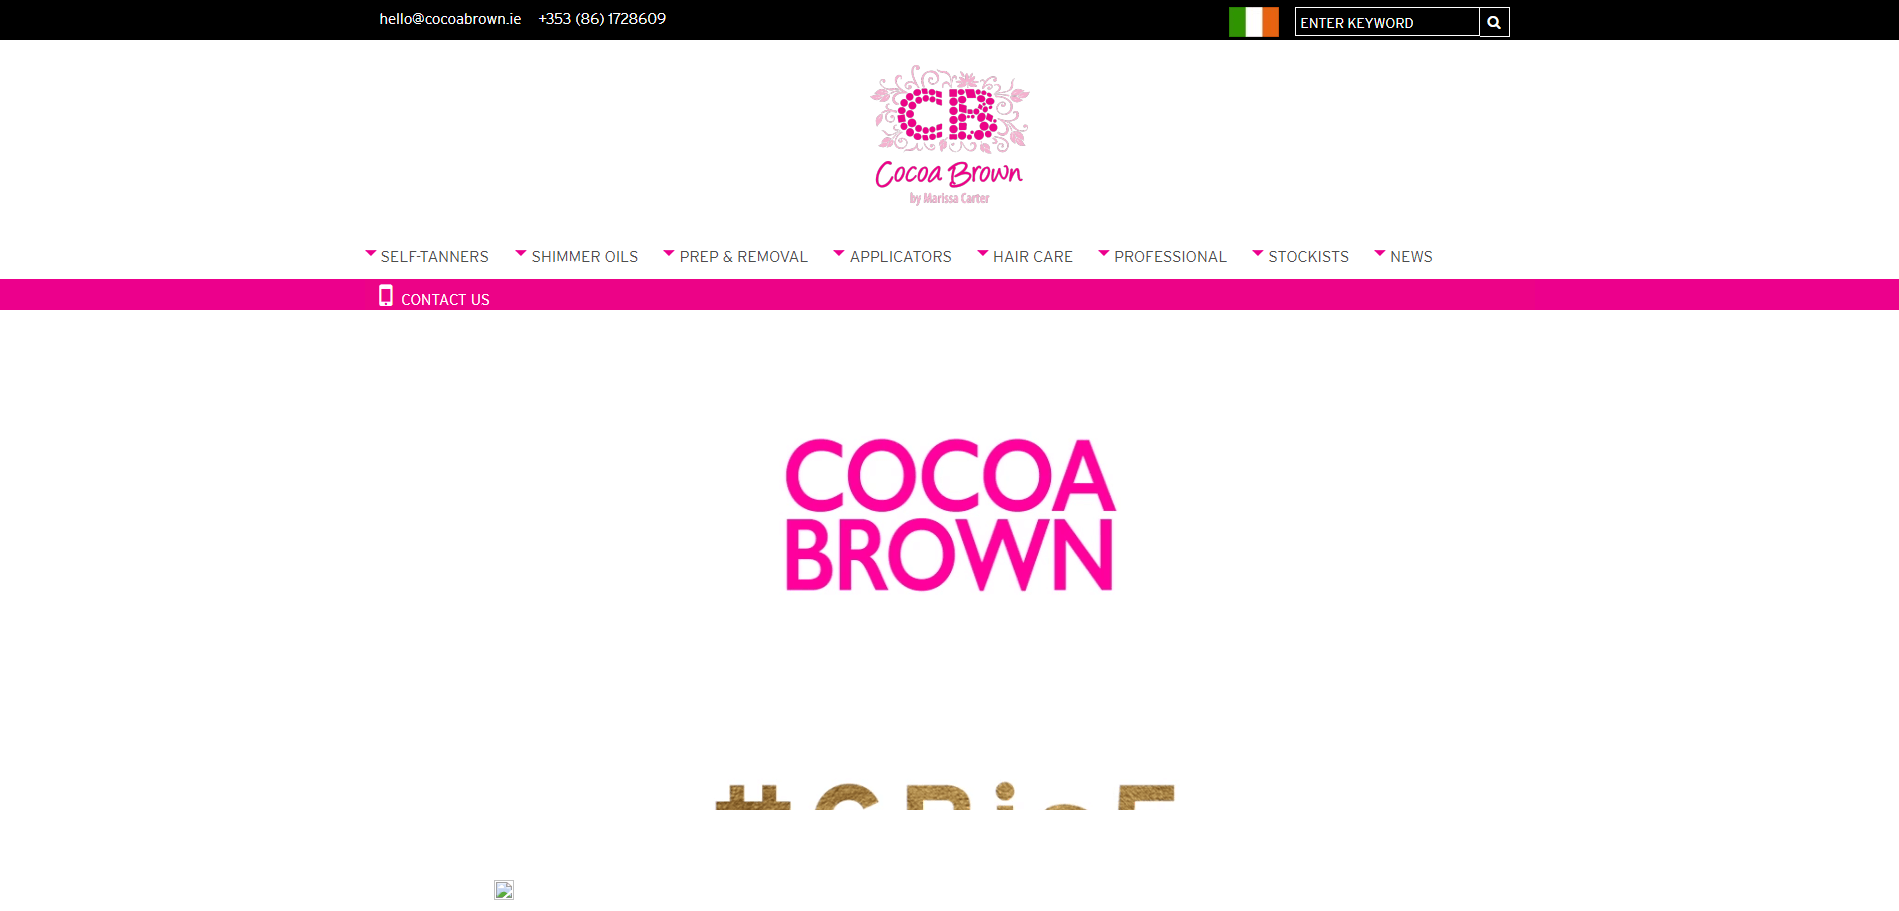 Cocoa Brown官网 Cocoa Brown by Marissa Carter官网